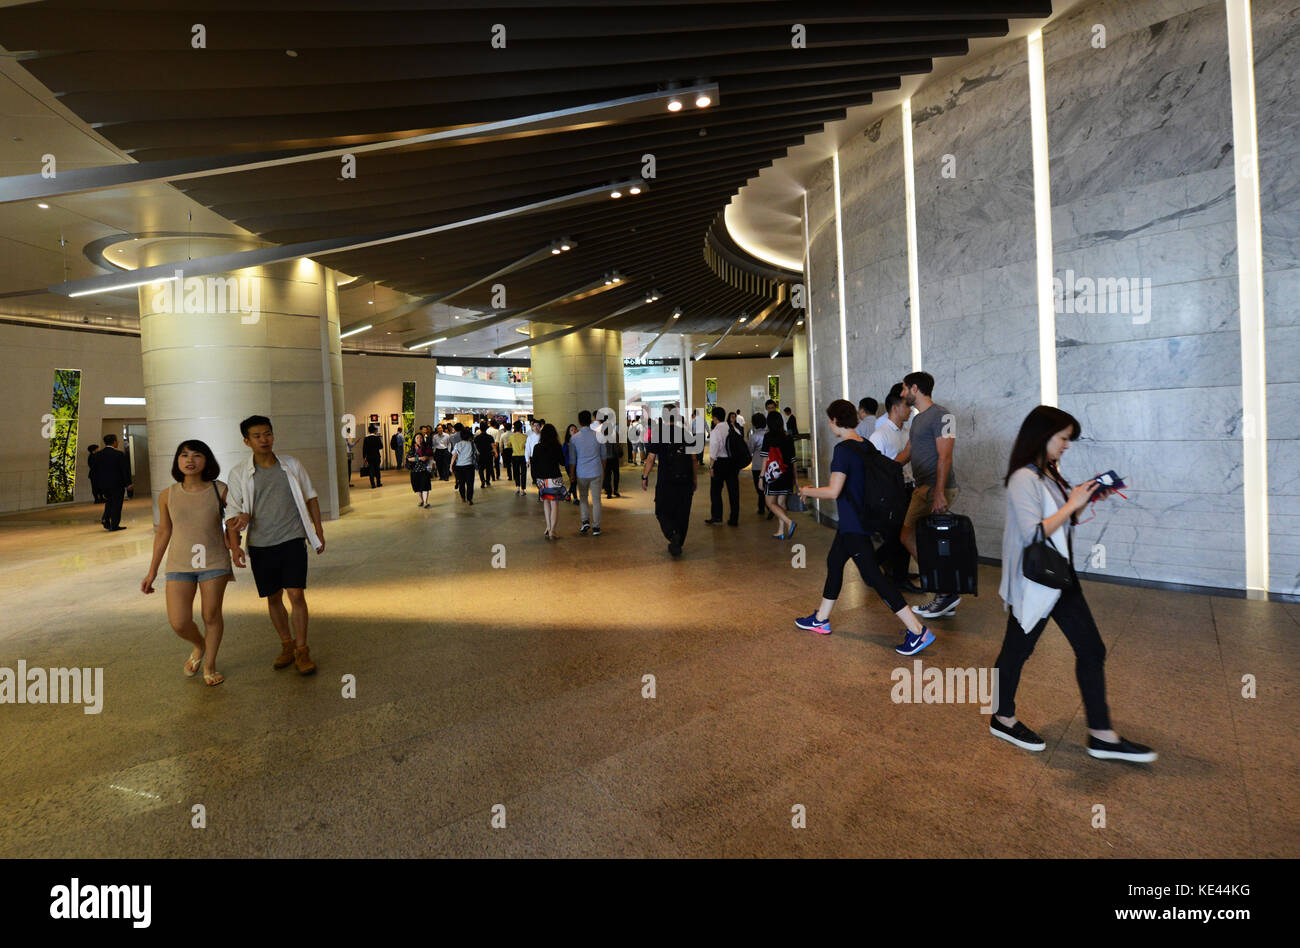 IFC Mall in Hong Kong Stockfoto